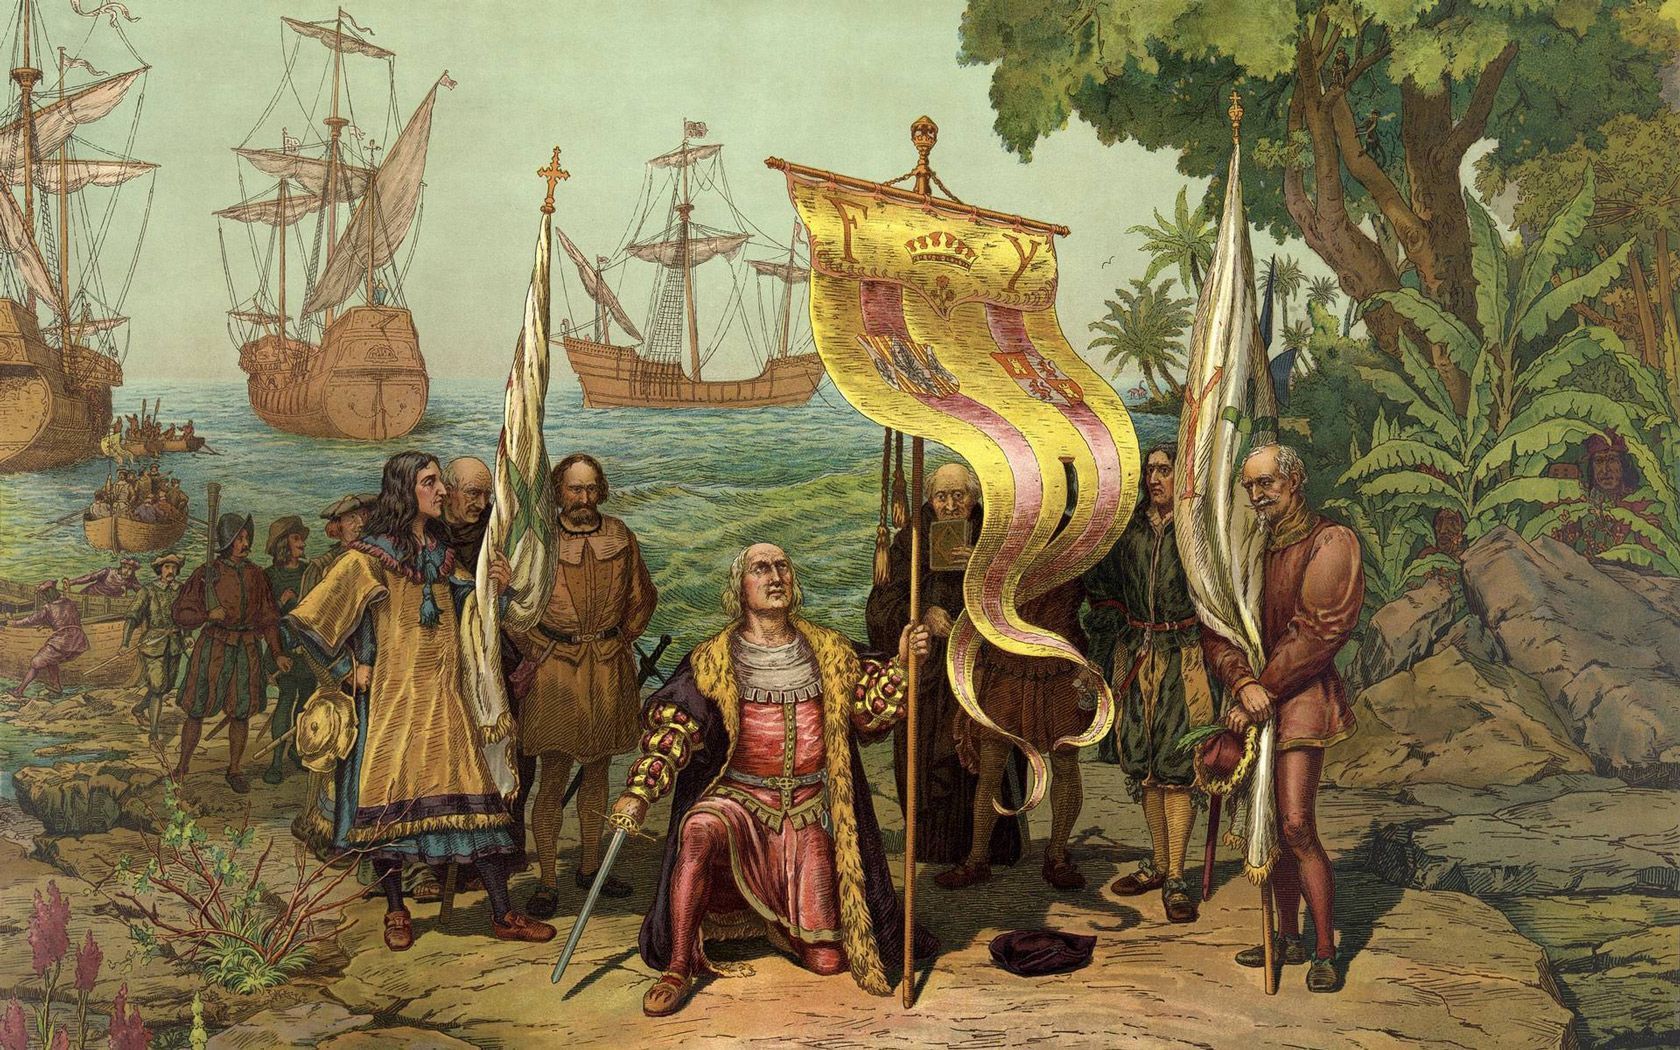 Columbus Day Wallpaper